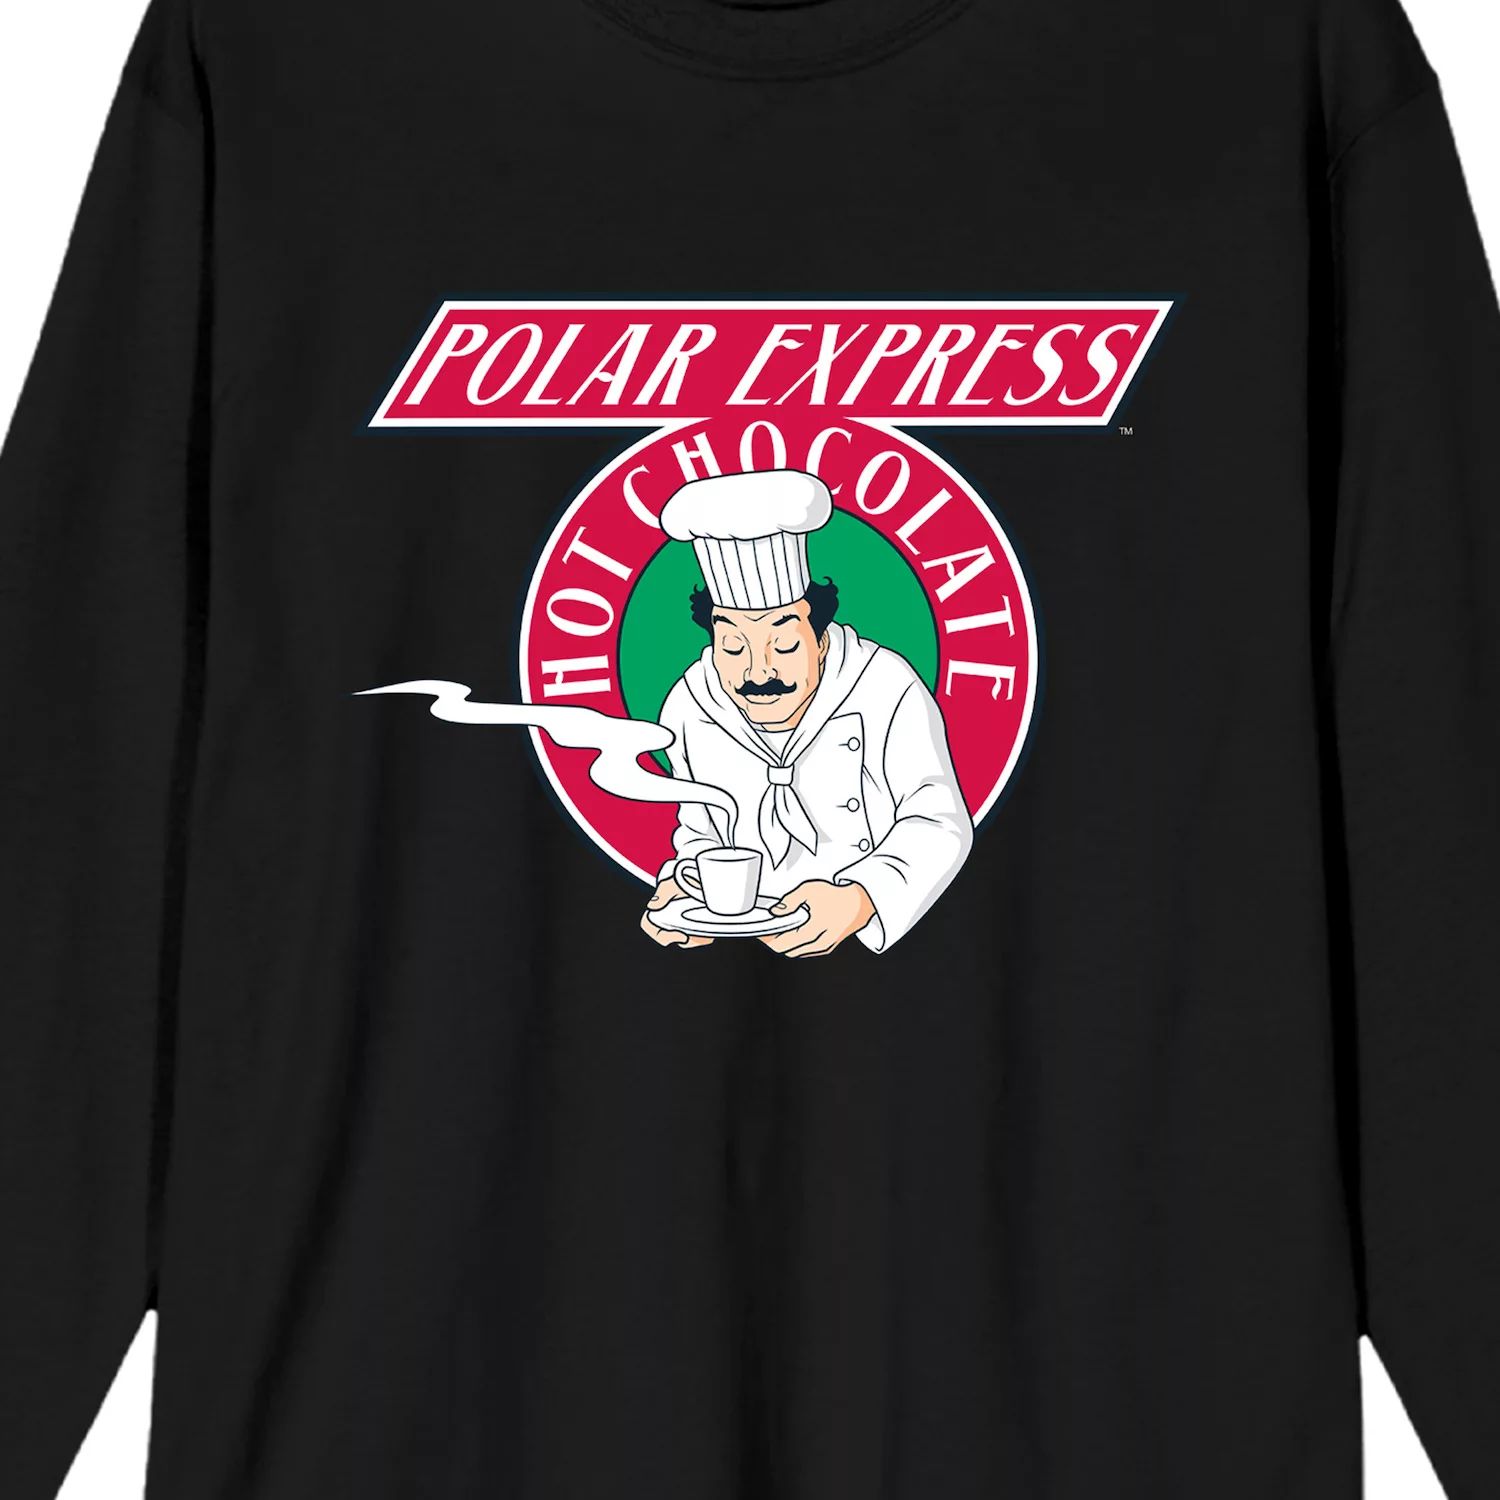 юниорская футболка polar express conductor licensed character Мужская футболка с длинными рукавами Polar Express Hot Chocolate Licensed Character